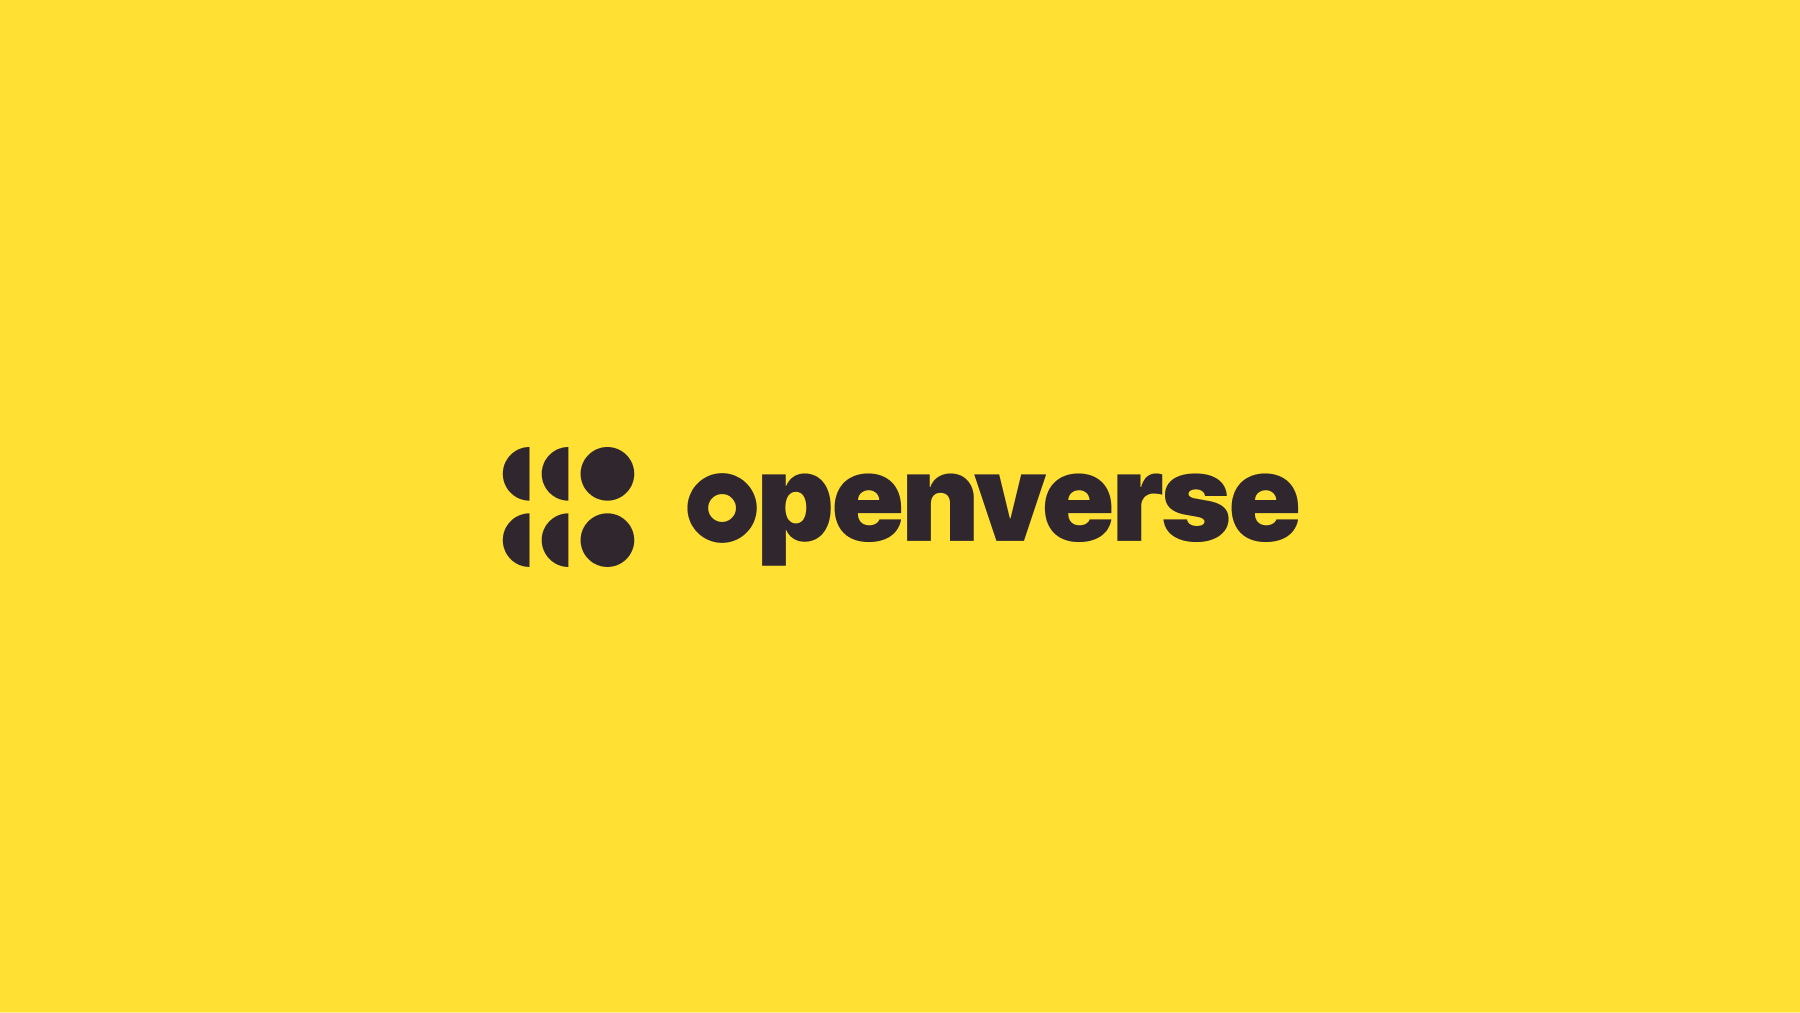 Openverse logo on yellow background.